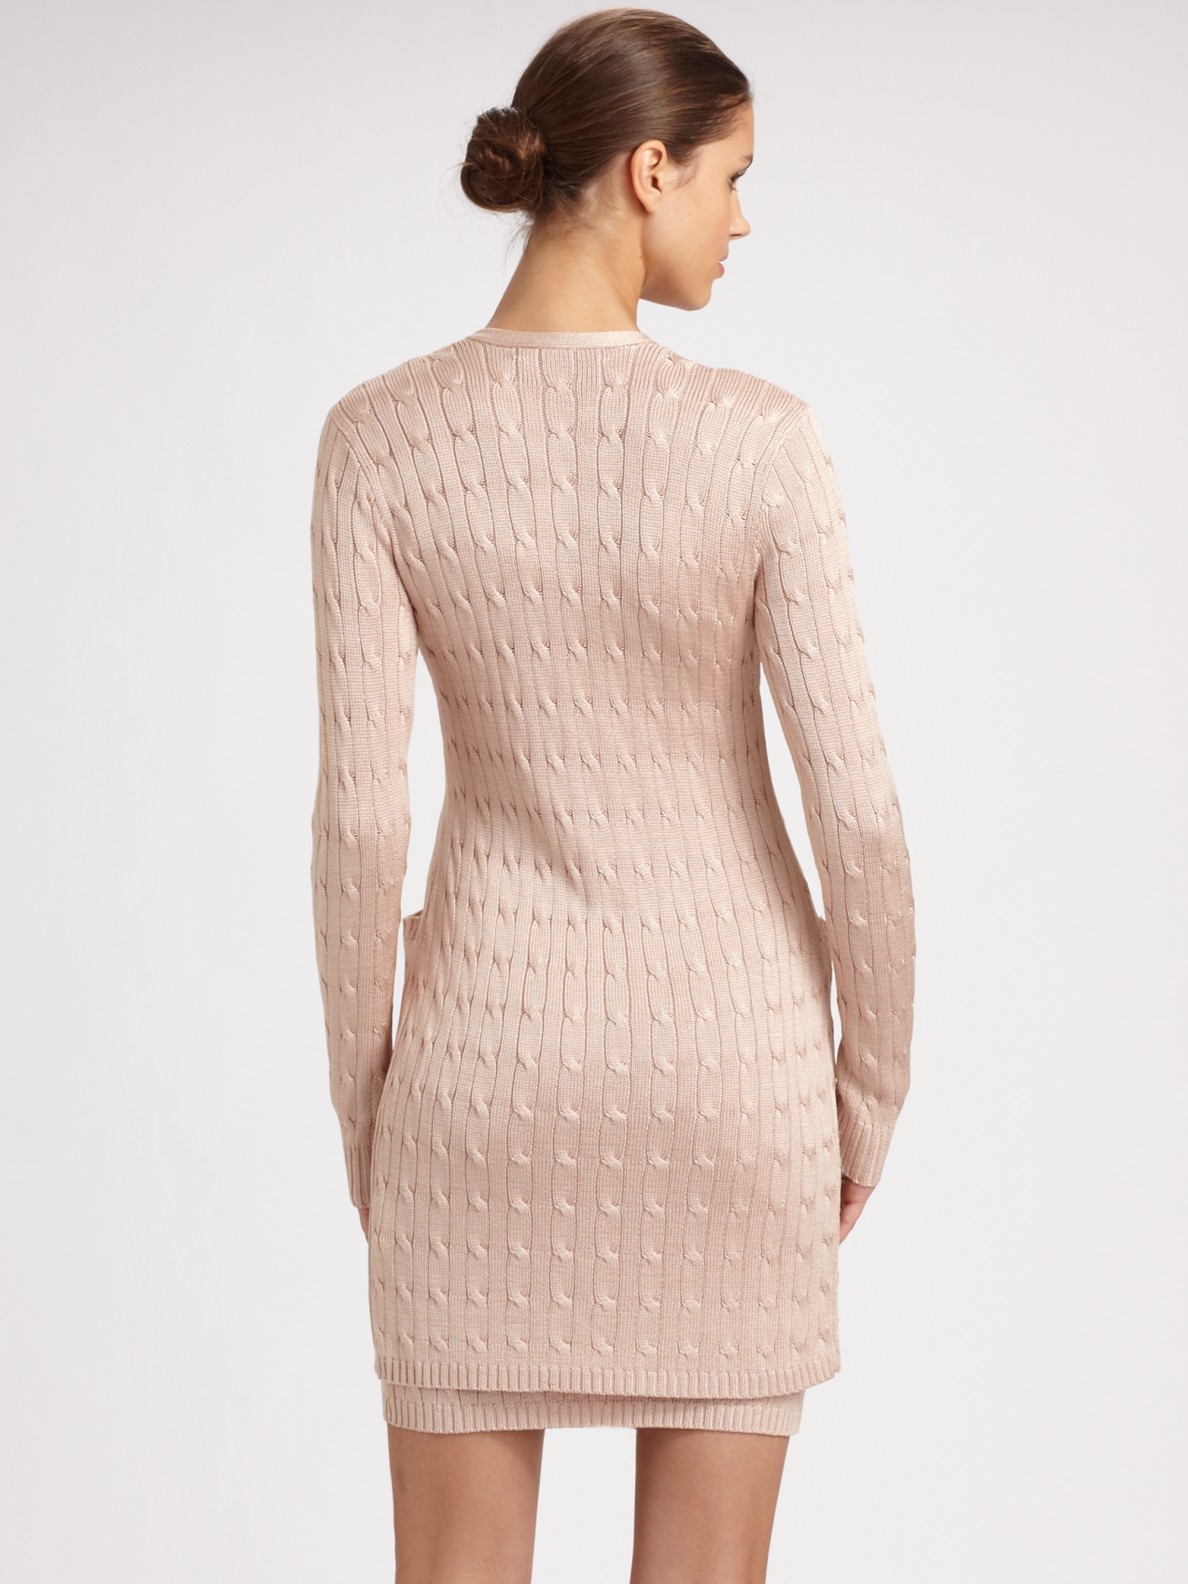 Ralph Lauren Black Label Silk Cable Knit Tank Dress in Pink | Lyst